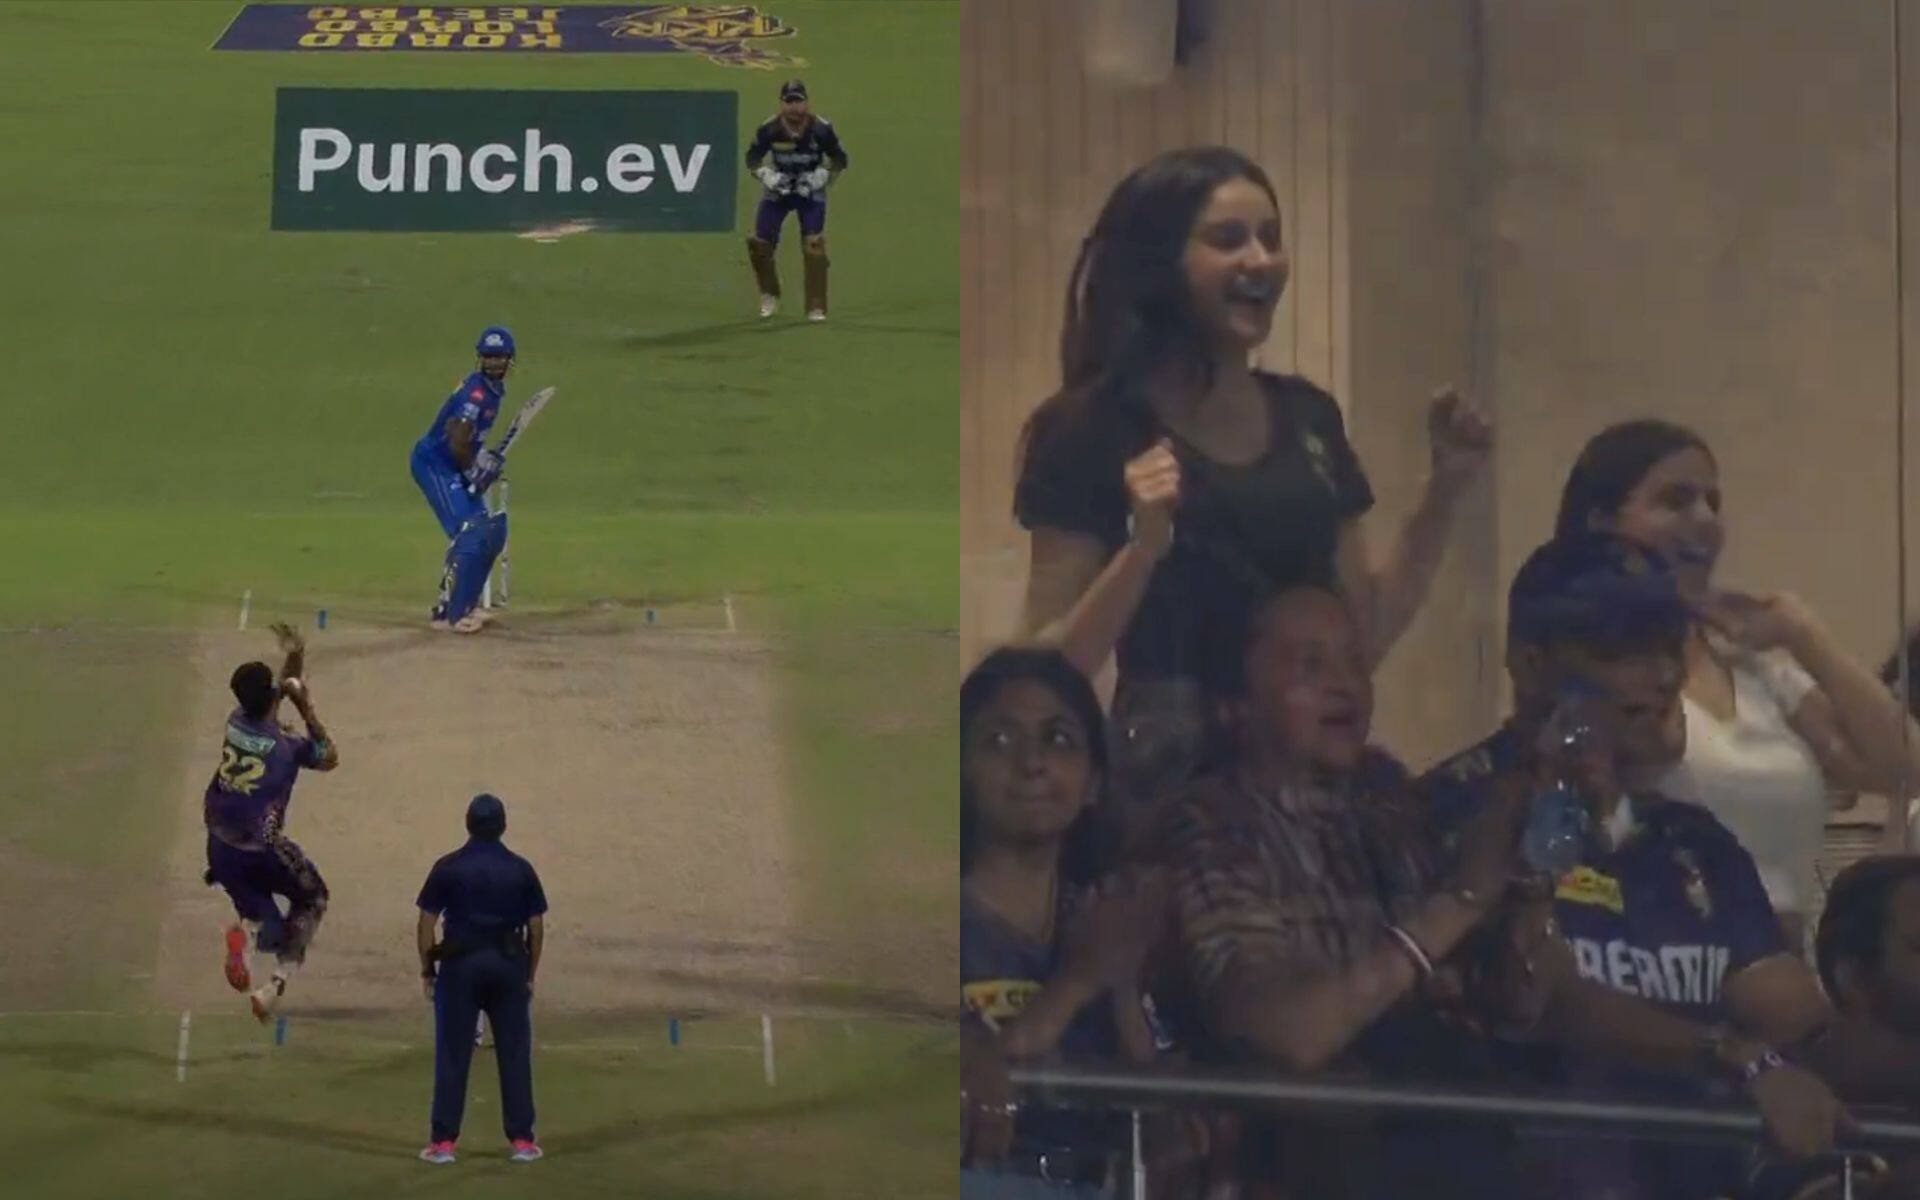 Suhana, Ananya's reactions after Harshit's wicket of Tilak (X.com)